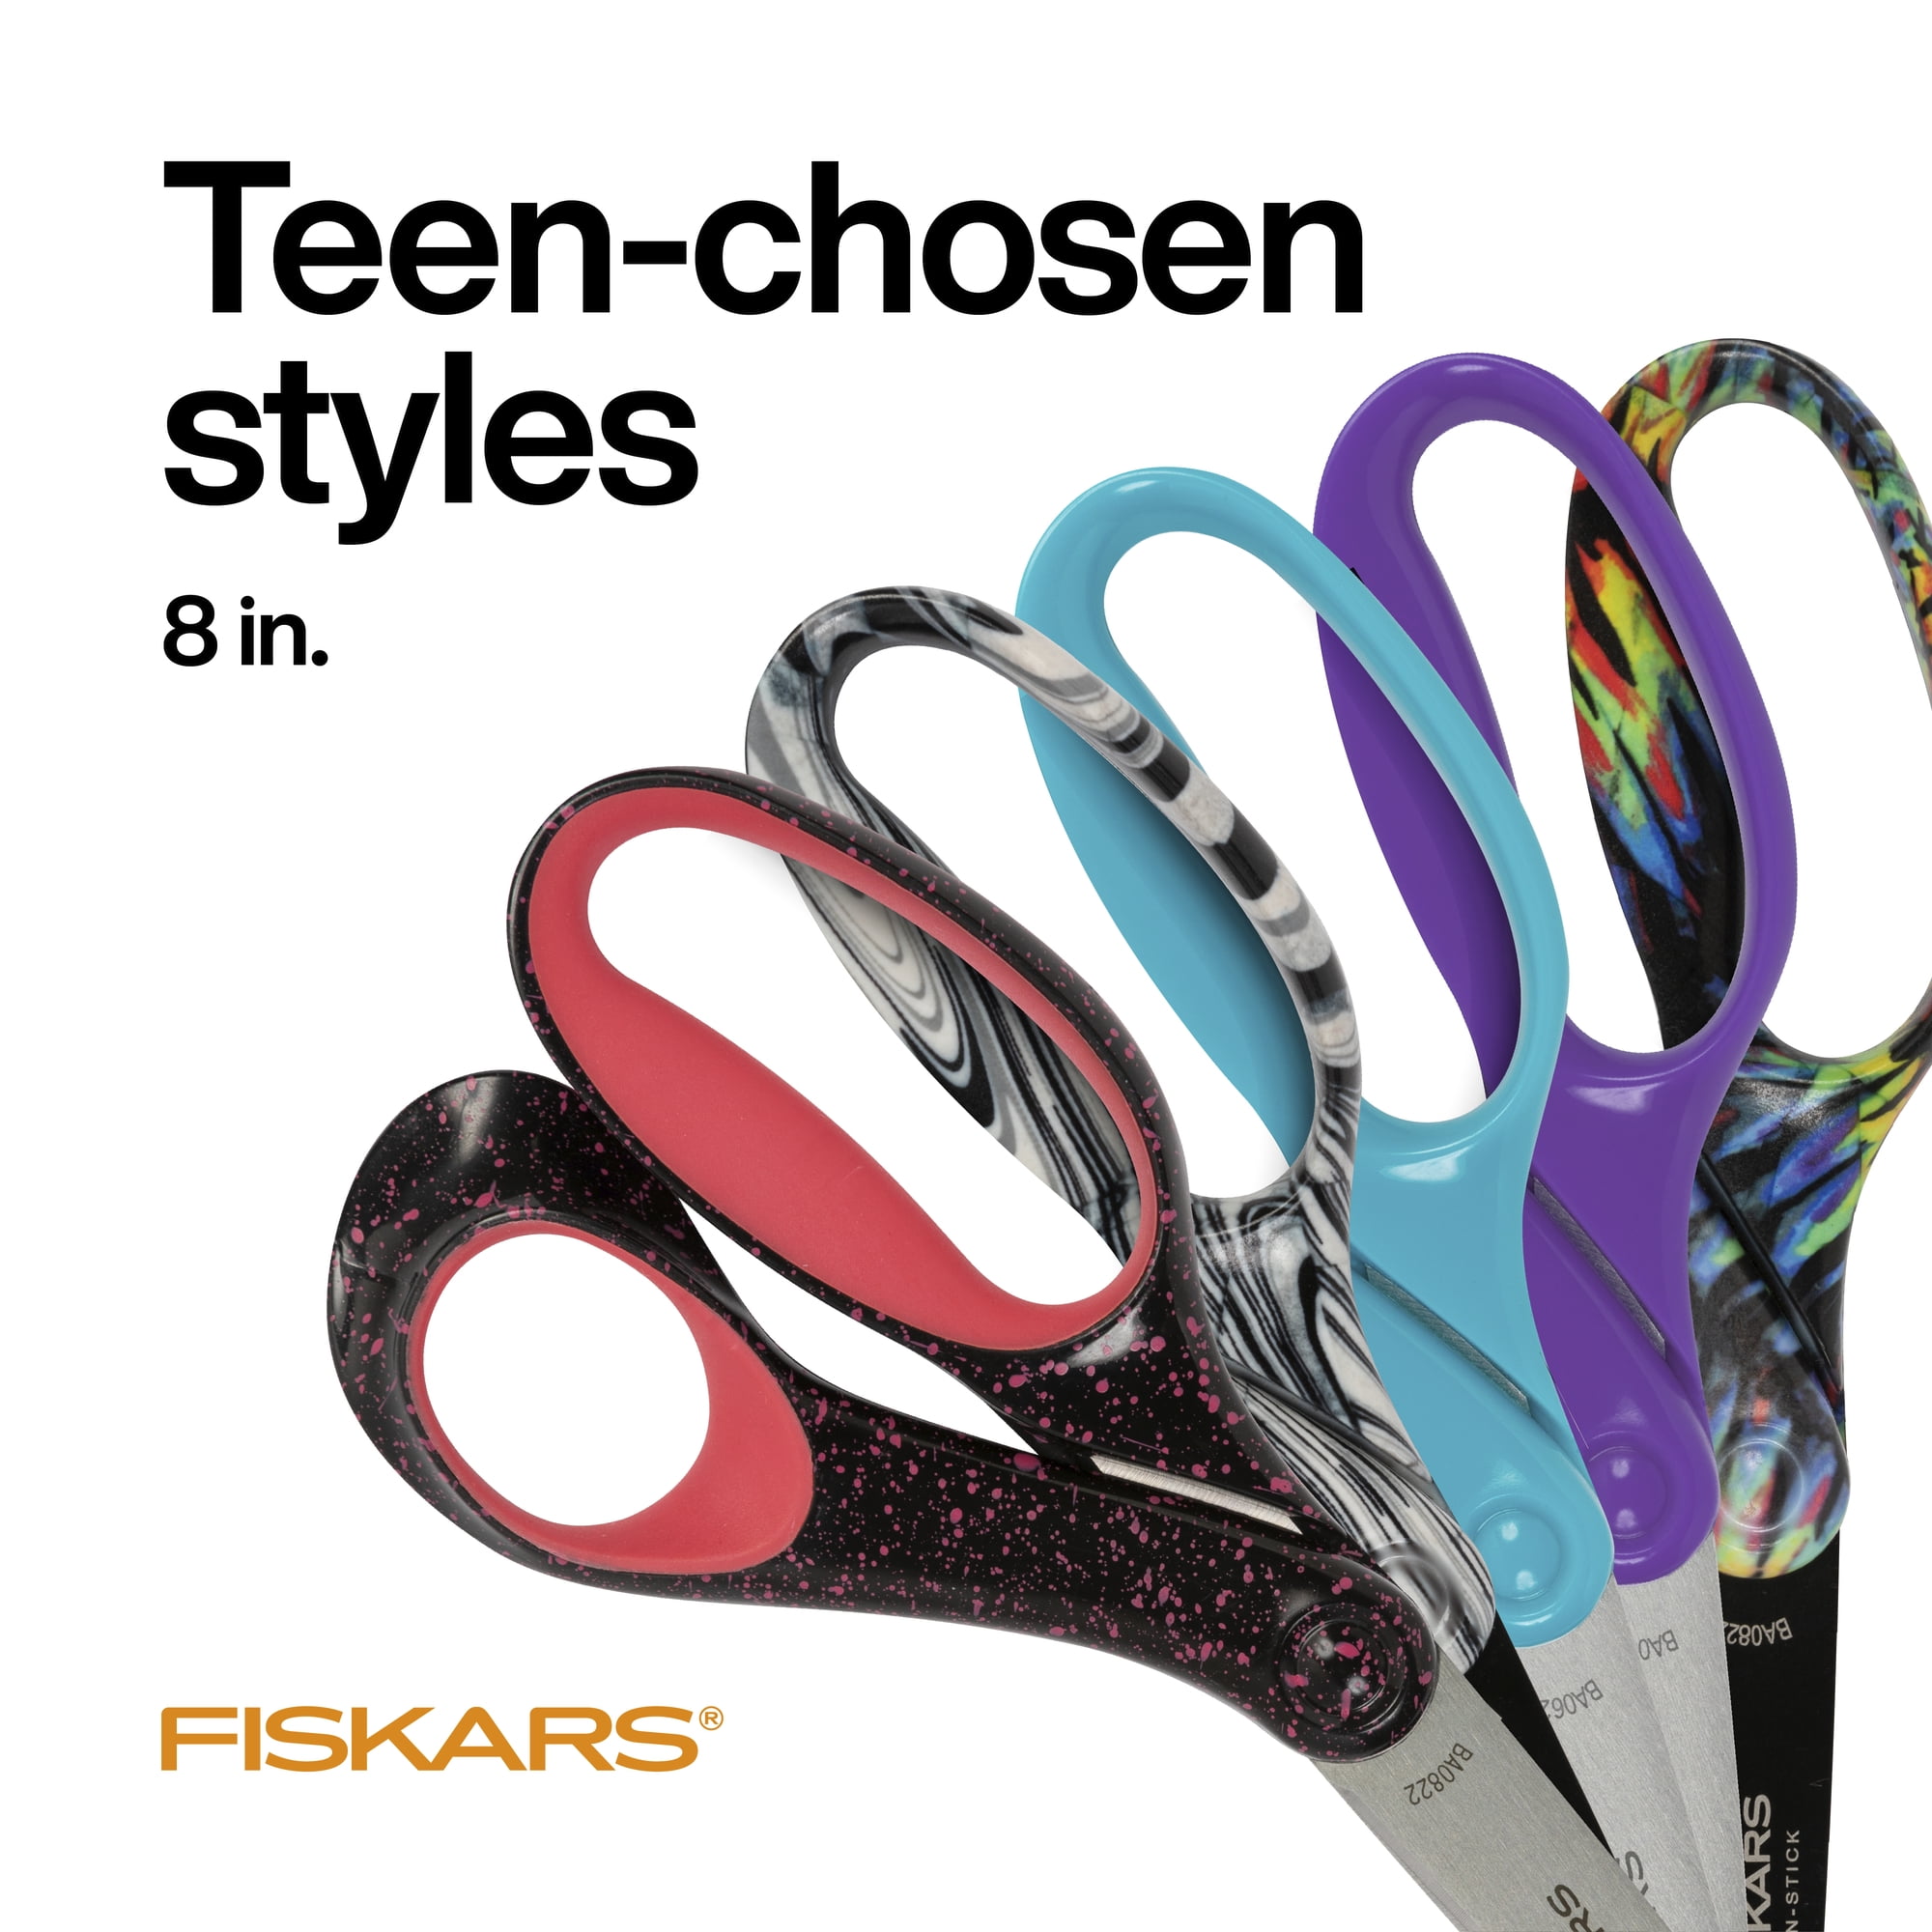 Created with Fiskars 8in Scissors - Avant Garden